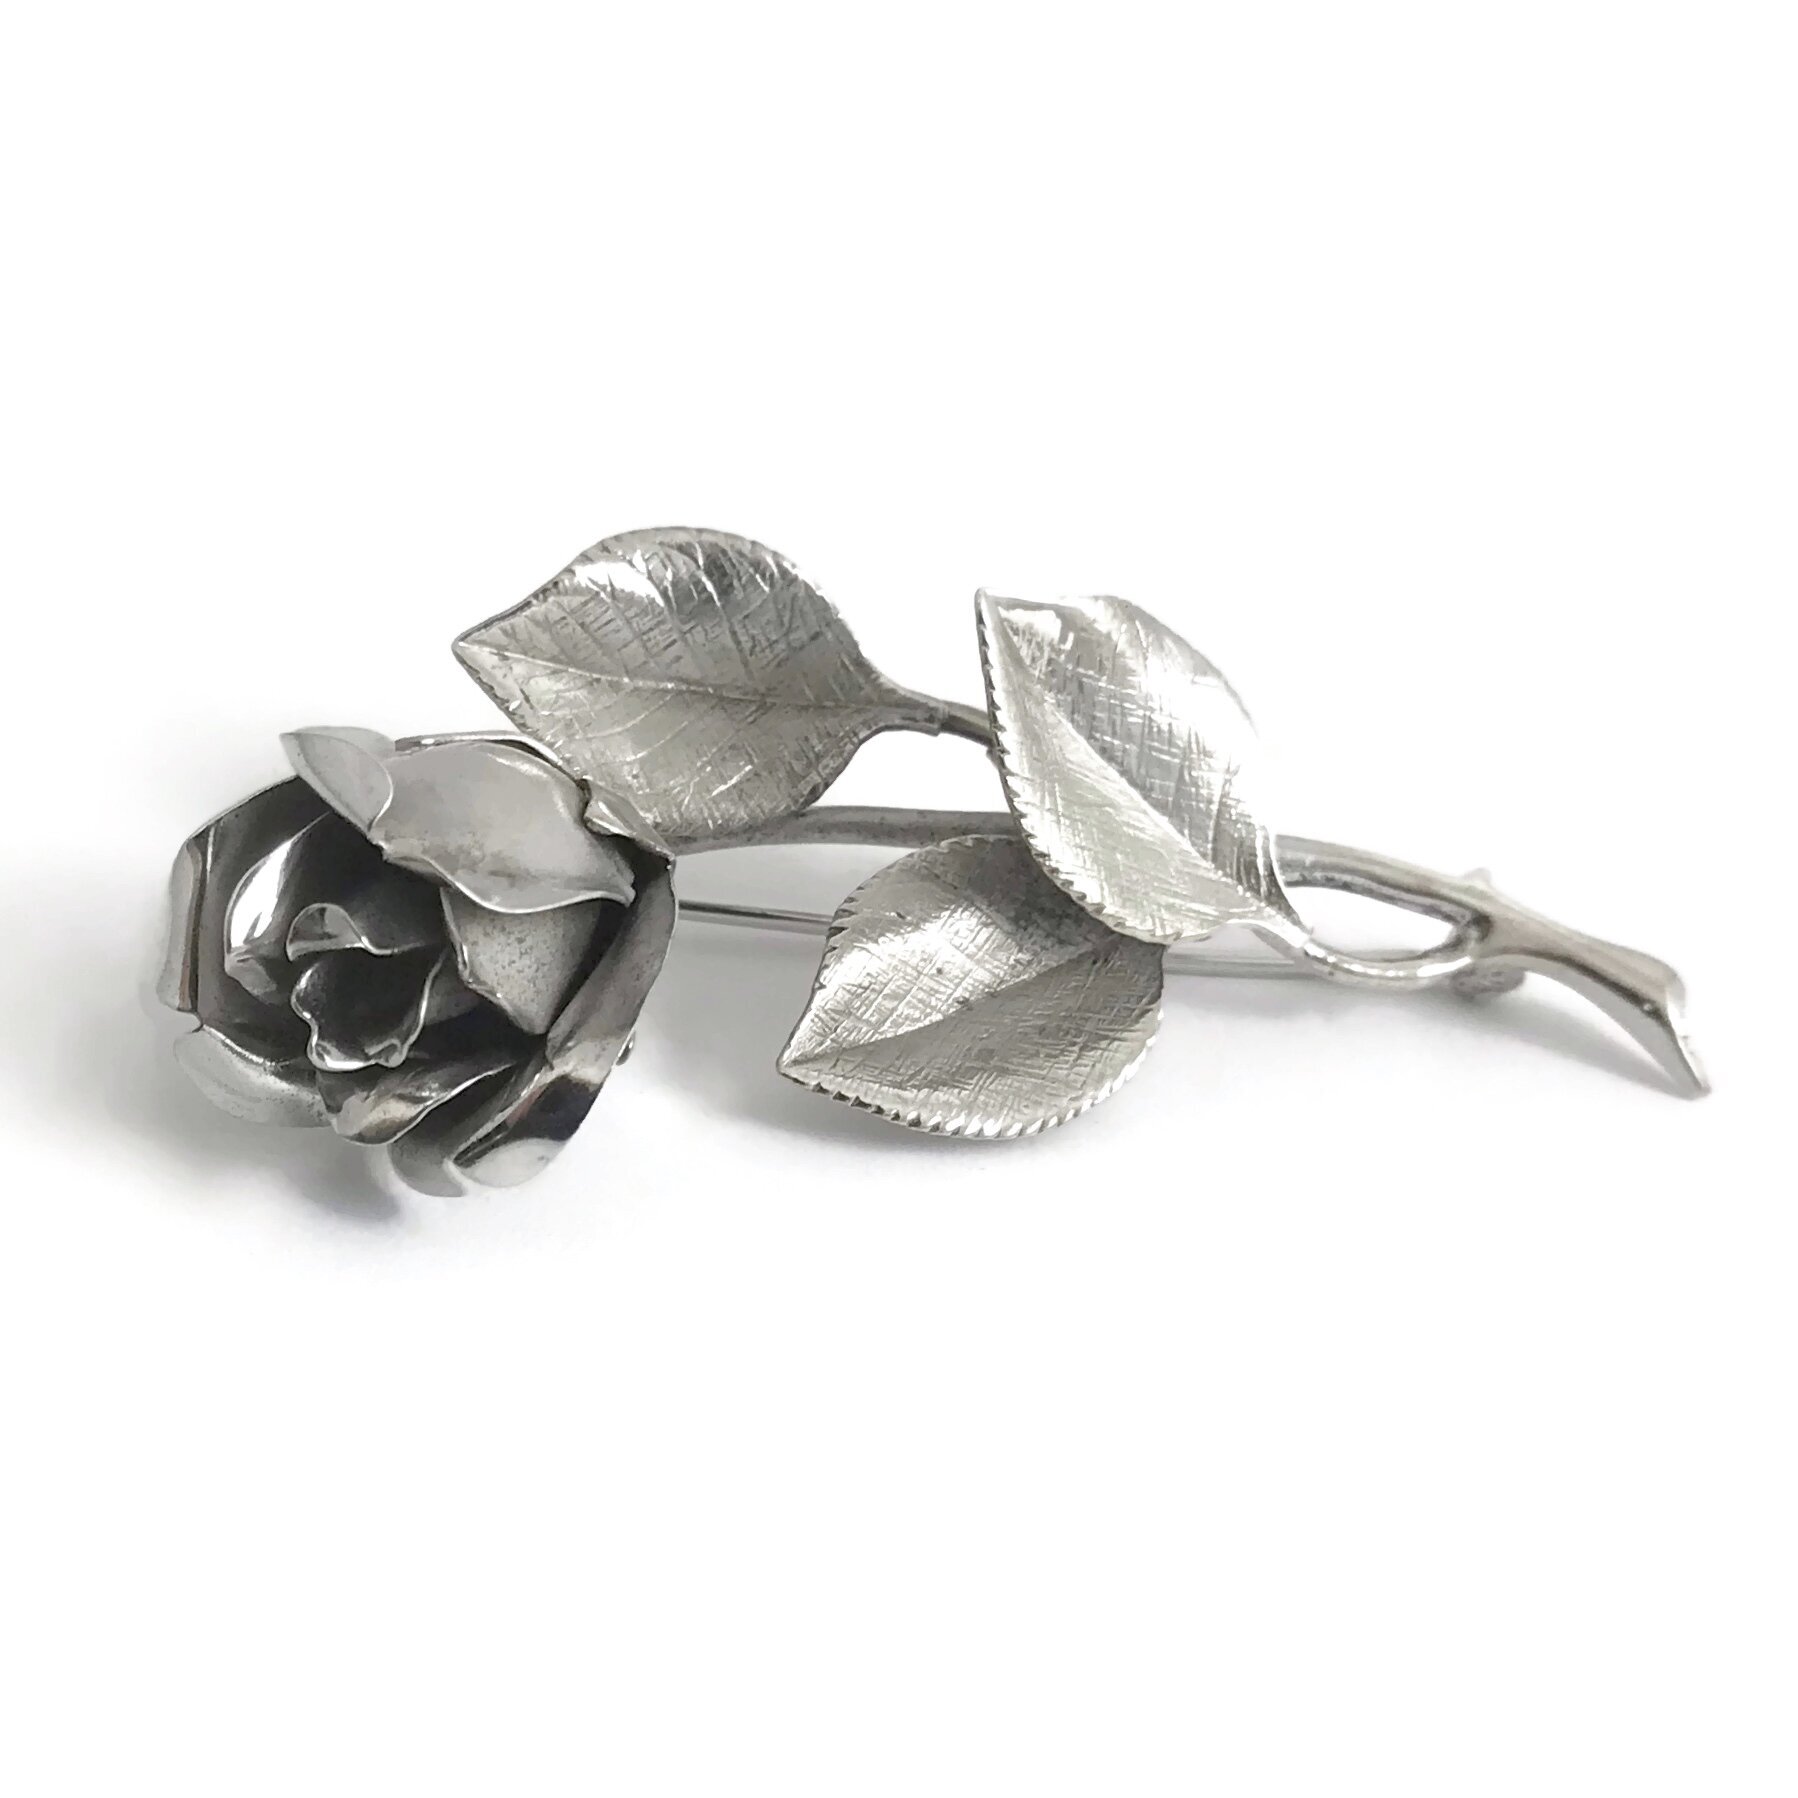 Antique Handmade Silver Flower Brooch